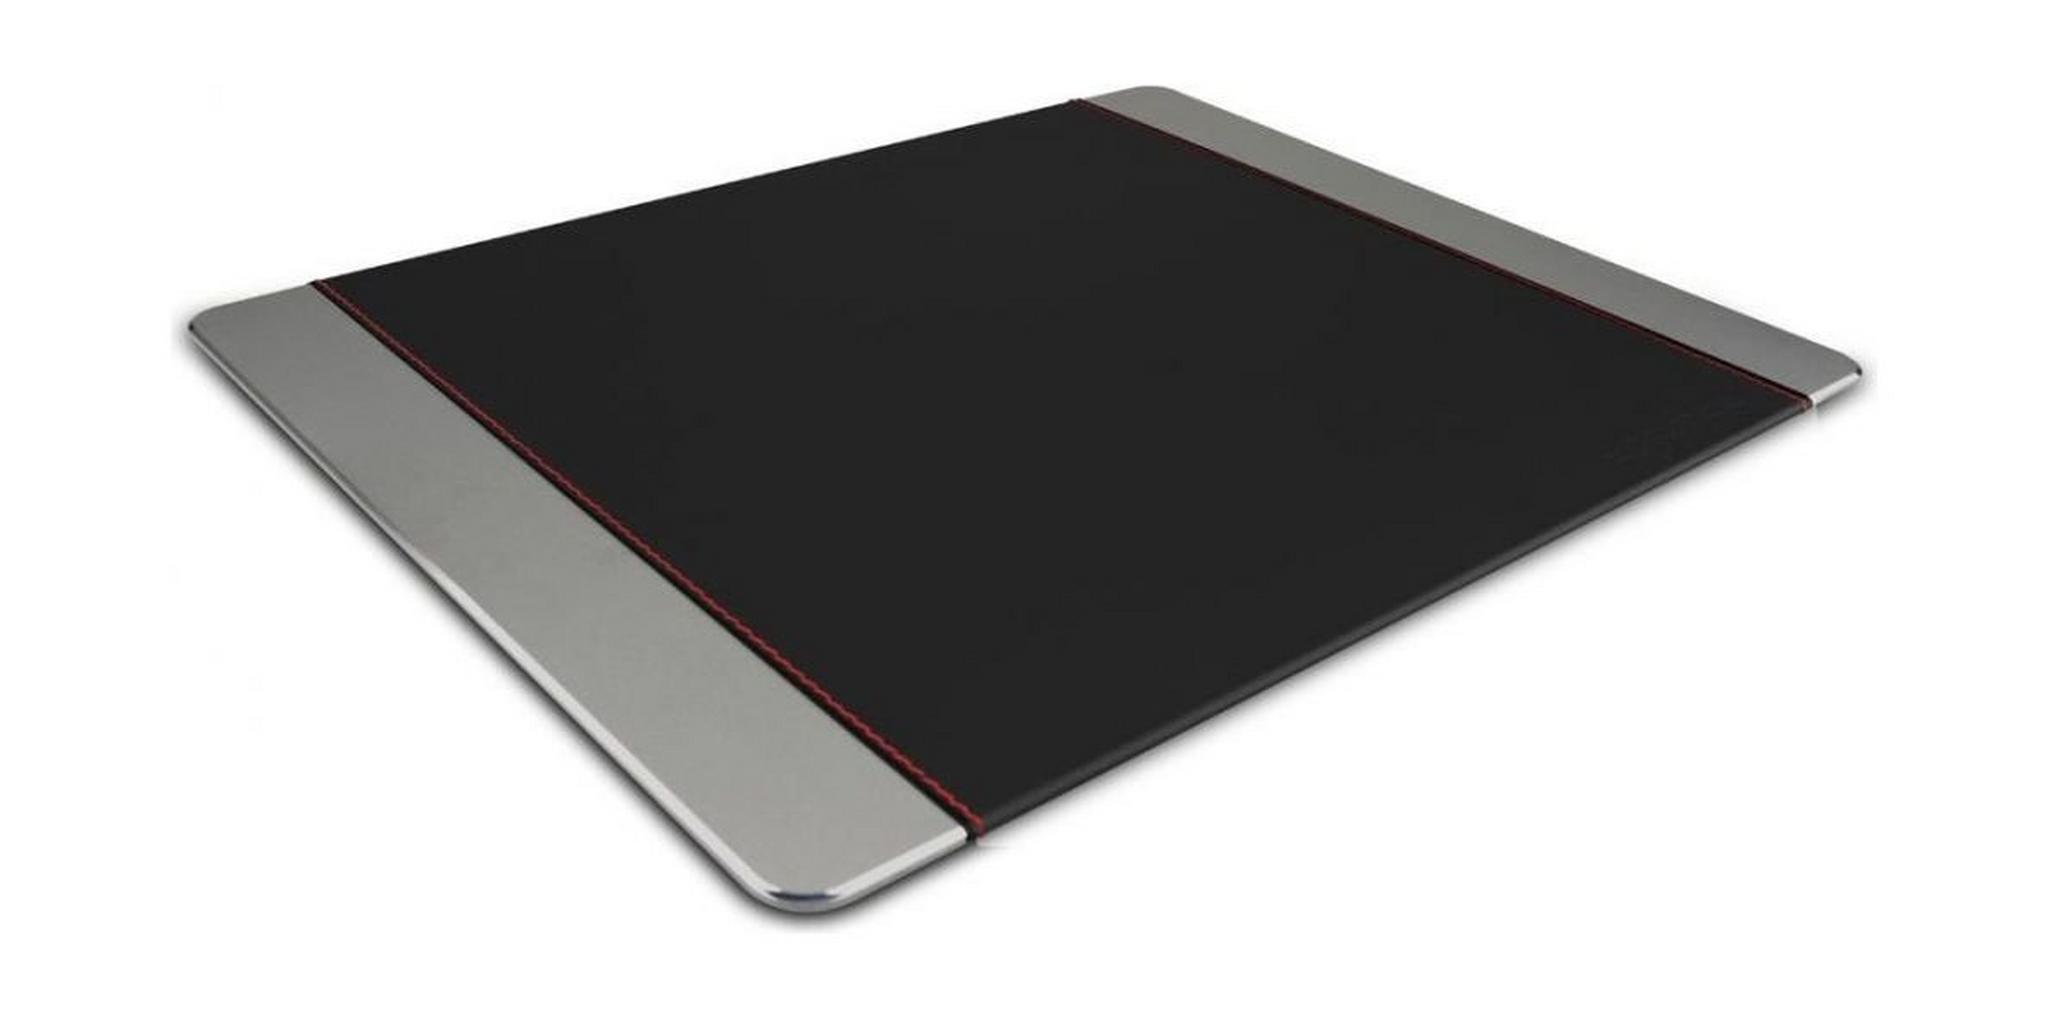 Promate Metapad-Pro Gaming Mouse Pad - Grey